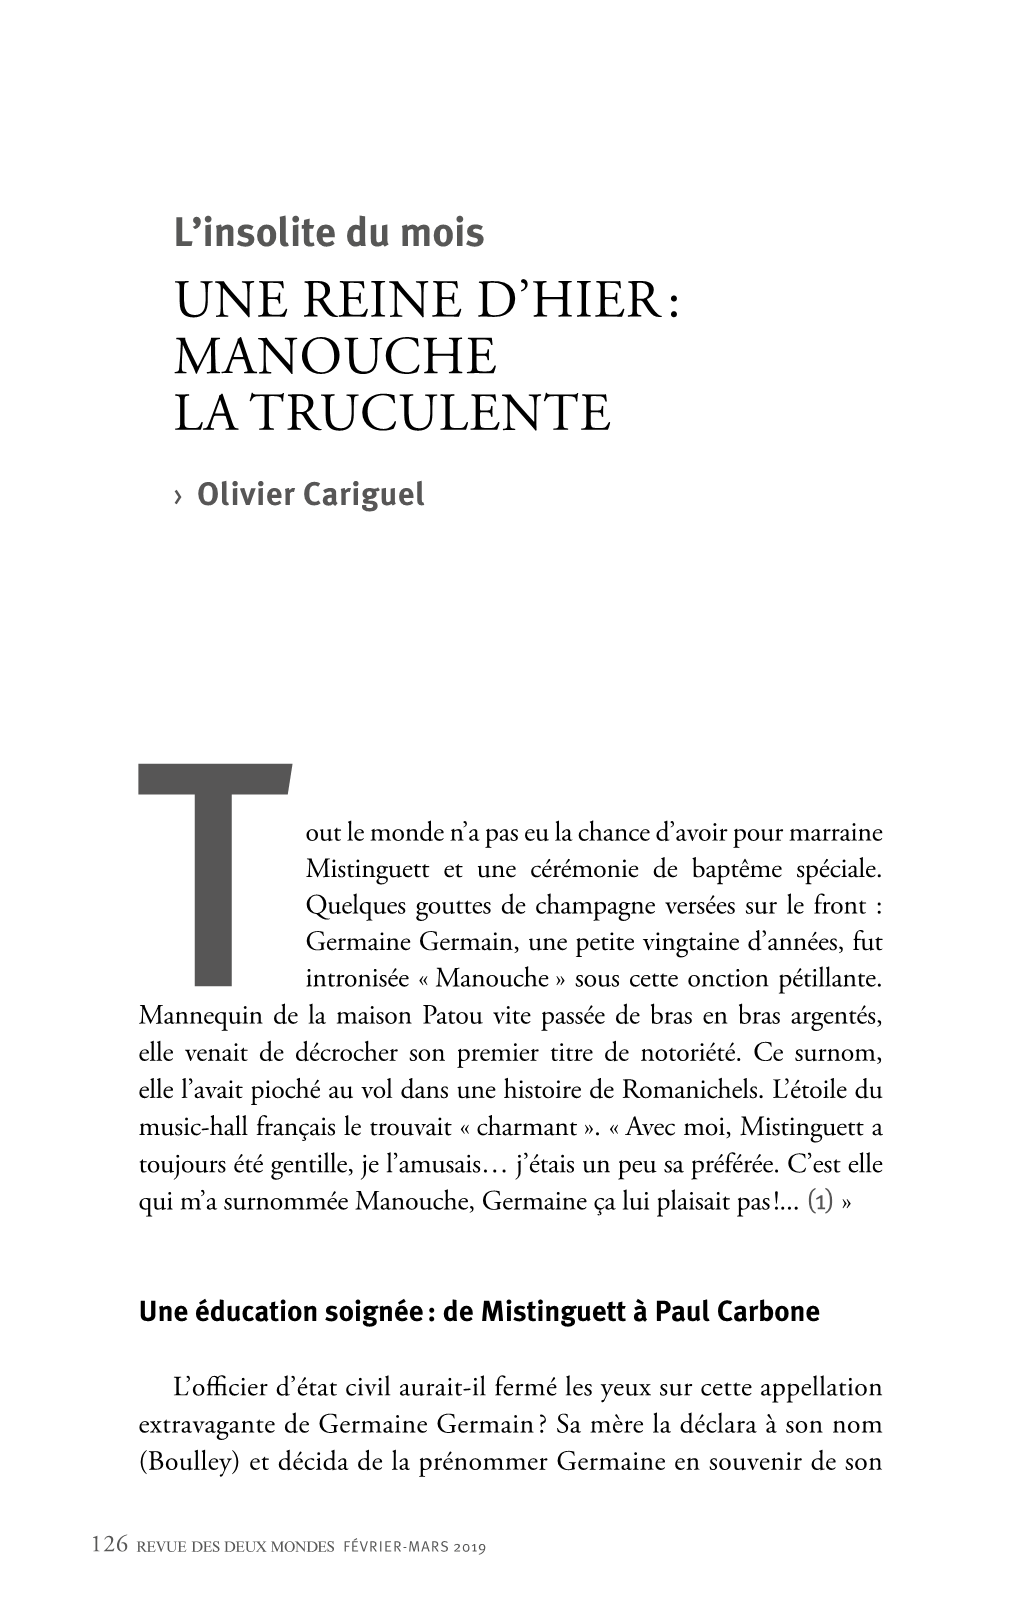 MANOUCHE LA TRUCULENTE › Olivier Cariguel